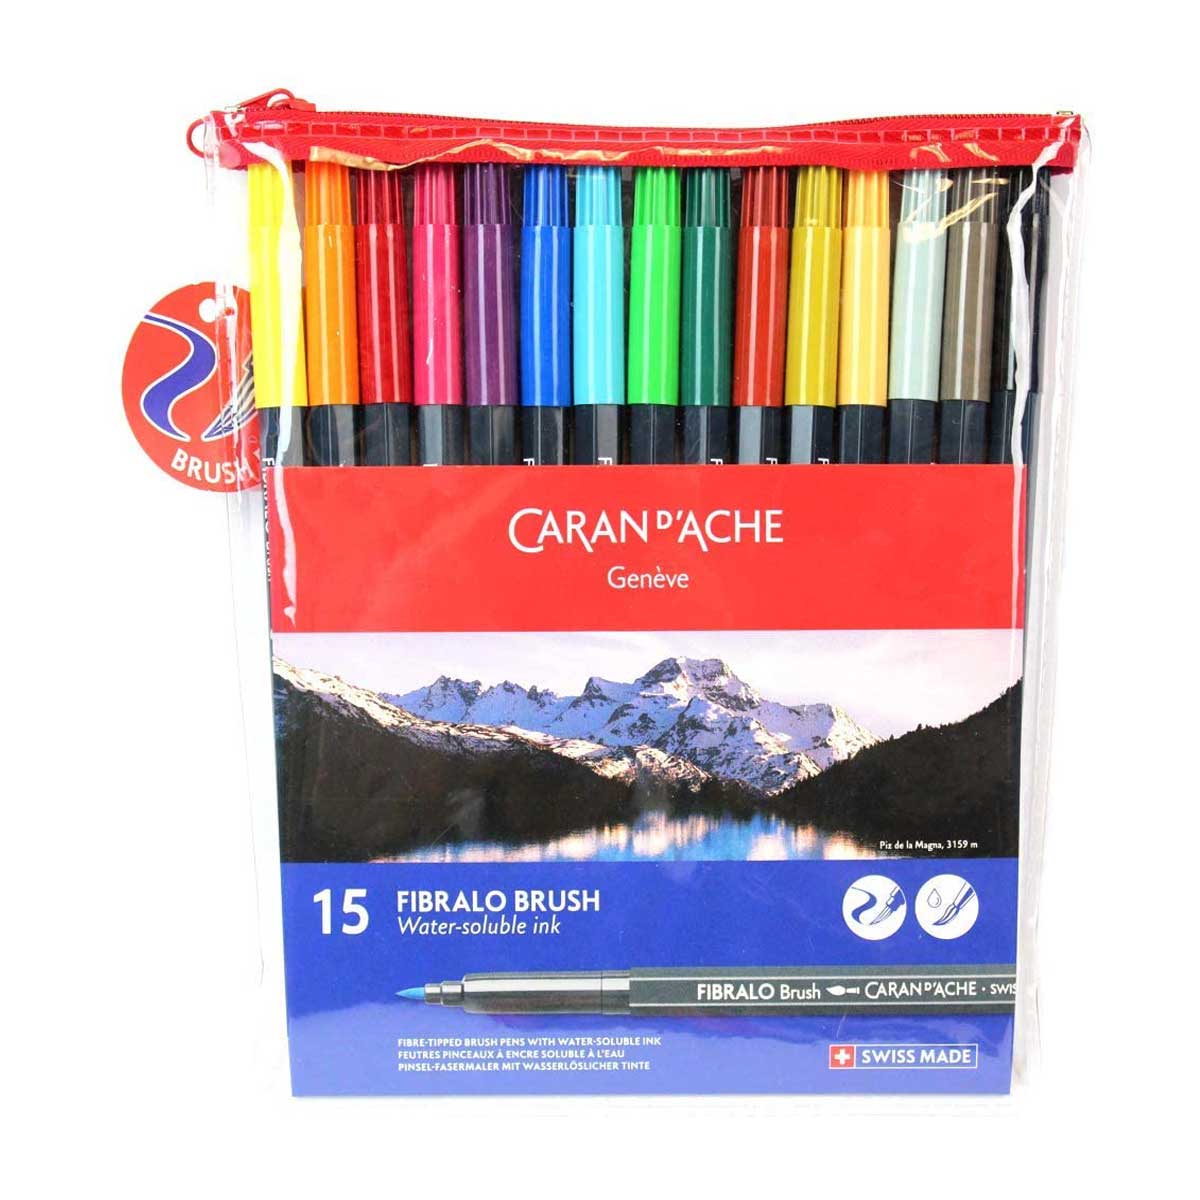 Caran d’Ache Fibralo Fibre-Tipped Brush Pens set of 15